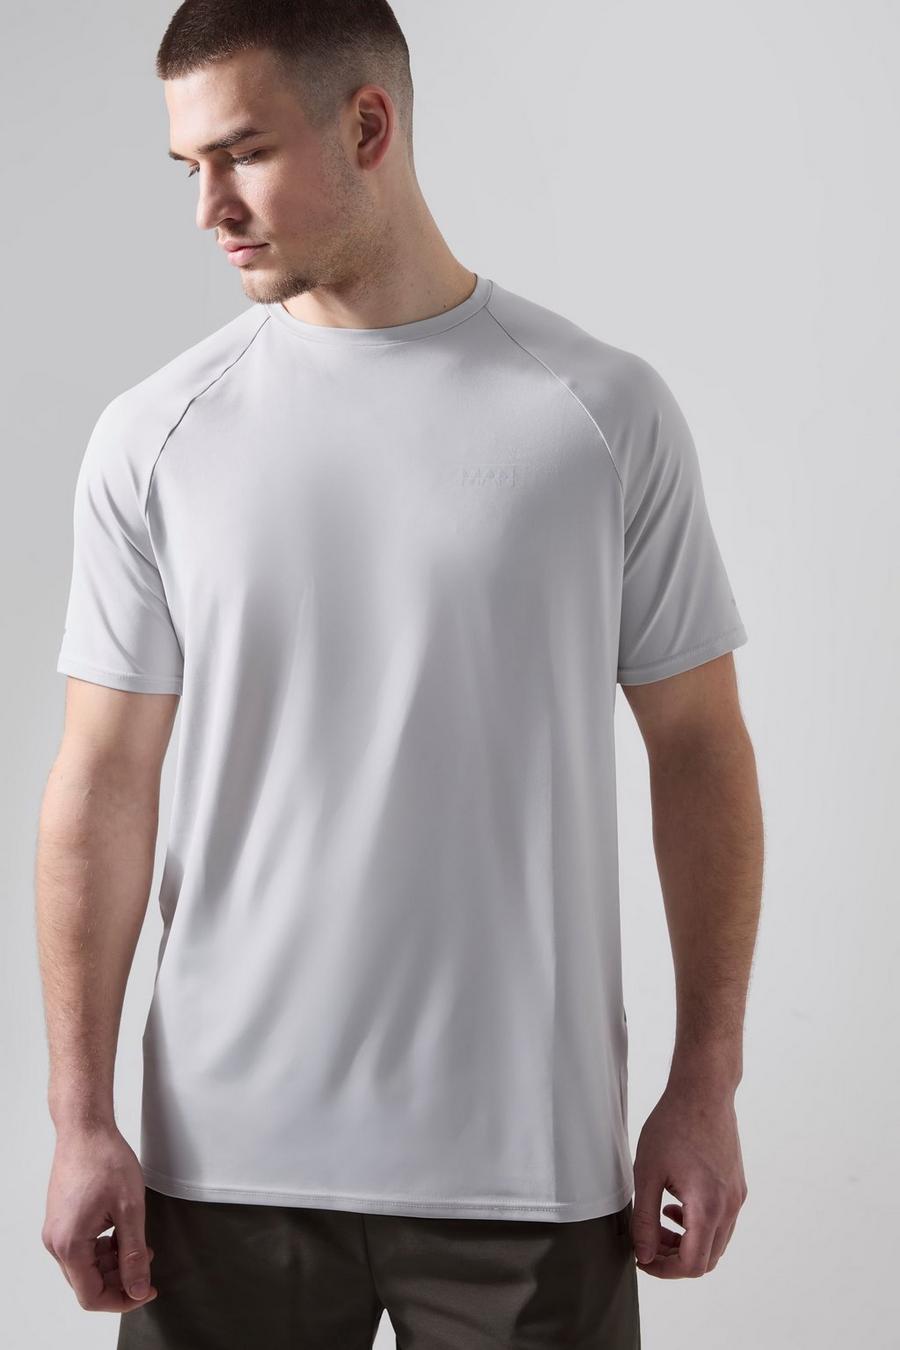 Grey Tall Raglan Man Active Fitness T-Shirt